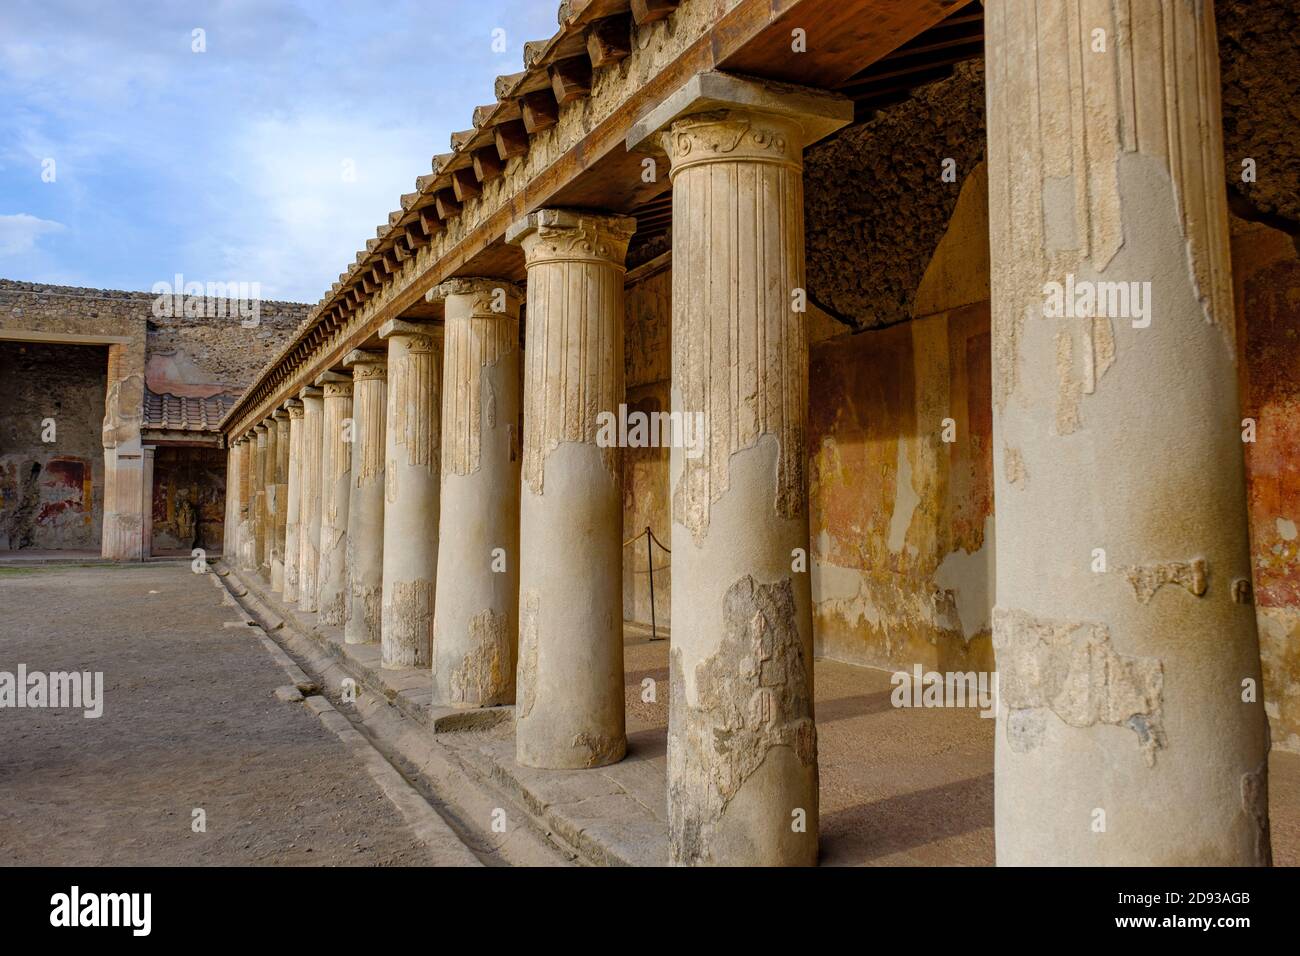 Columns outside the Stabian Baths (Terme Stabiane) bathhouse, ancient Roman bath complex ruins on Via Stabiana, Pompeii, Campania, Italy Stock Photo